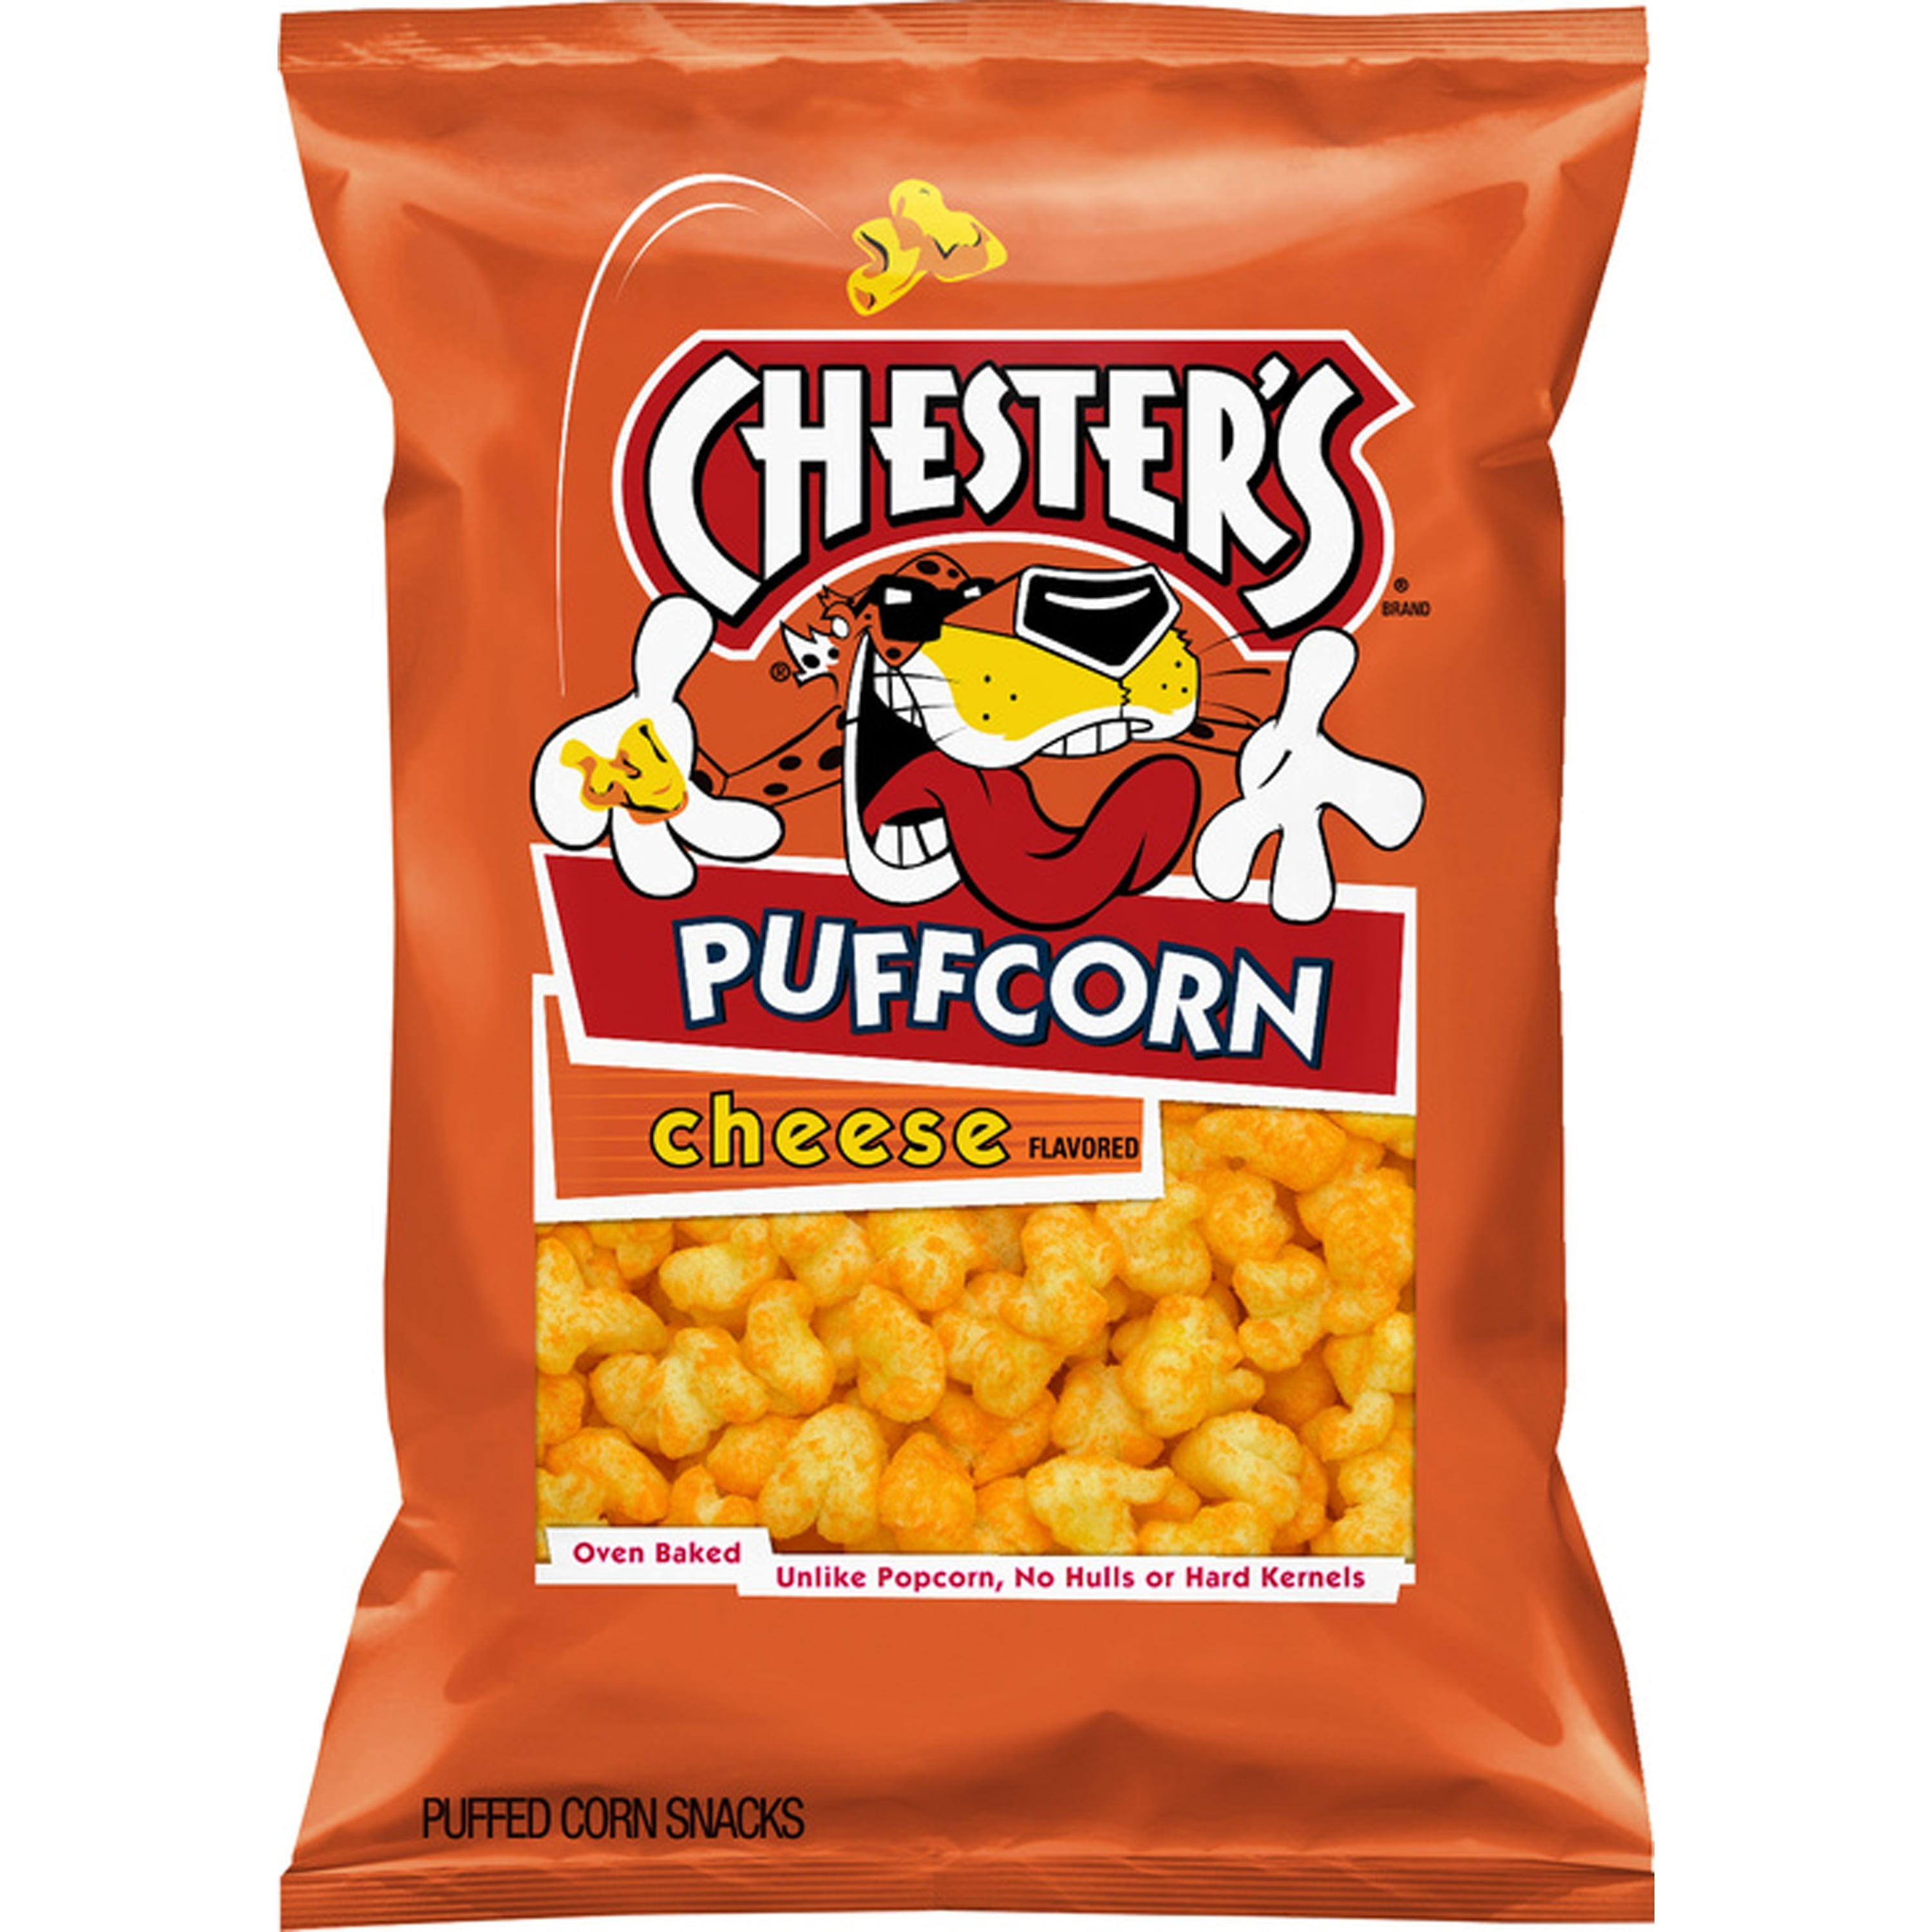 Chesters Puffcorn Cheese Flavored Popcorn, 4.25 Oz. - Walmart.com